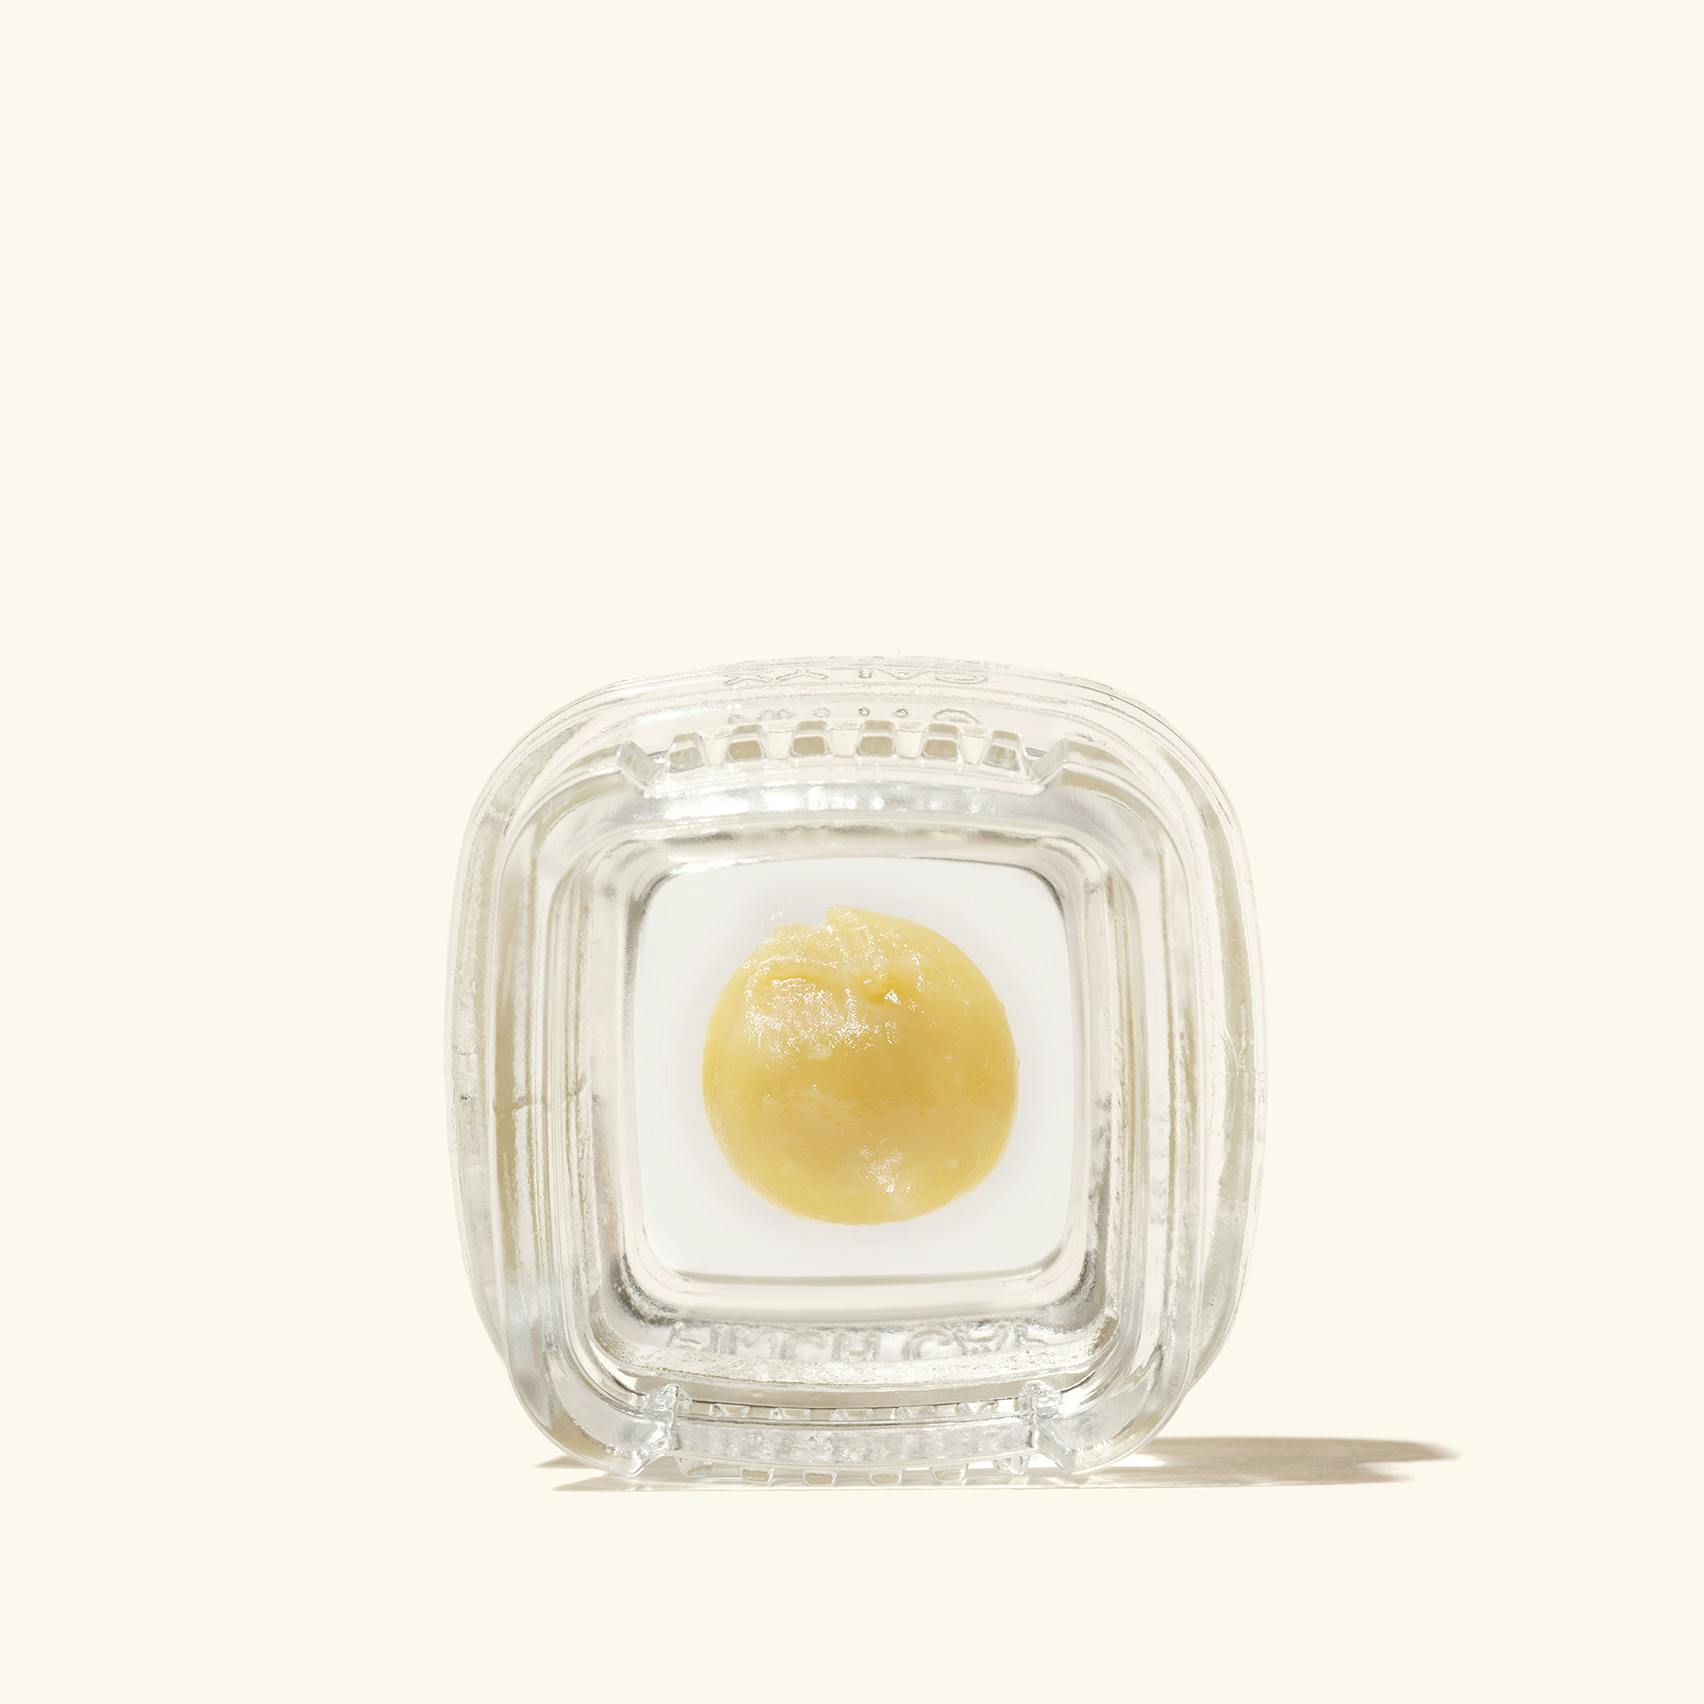 Papas Select Badder Jar Product Image PDP Main Gallery Cream 01